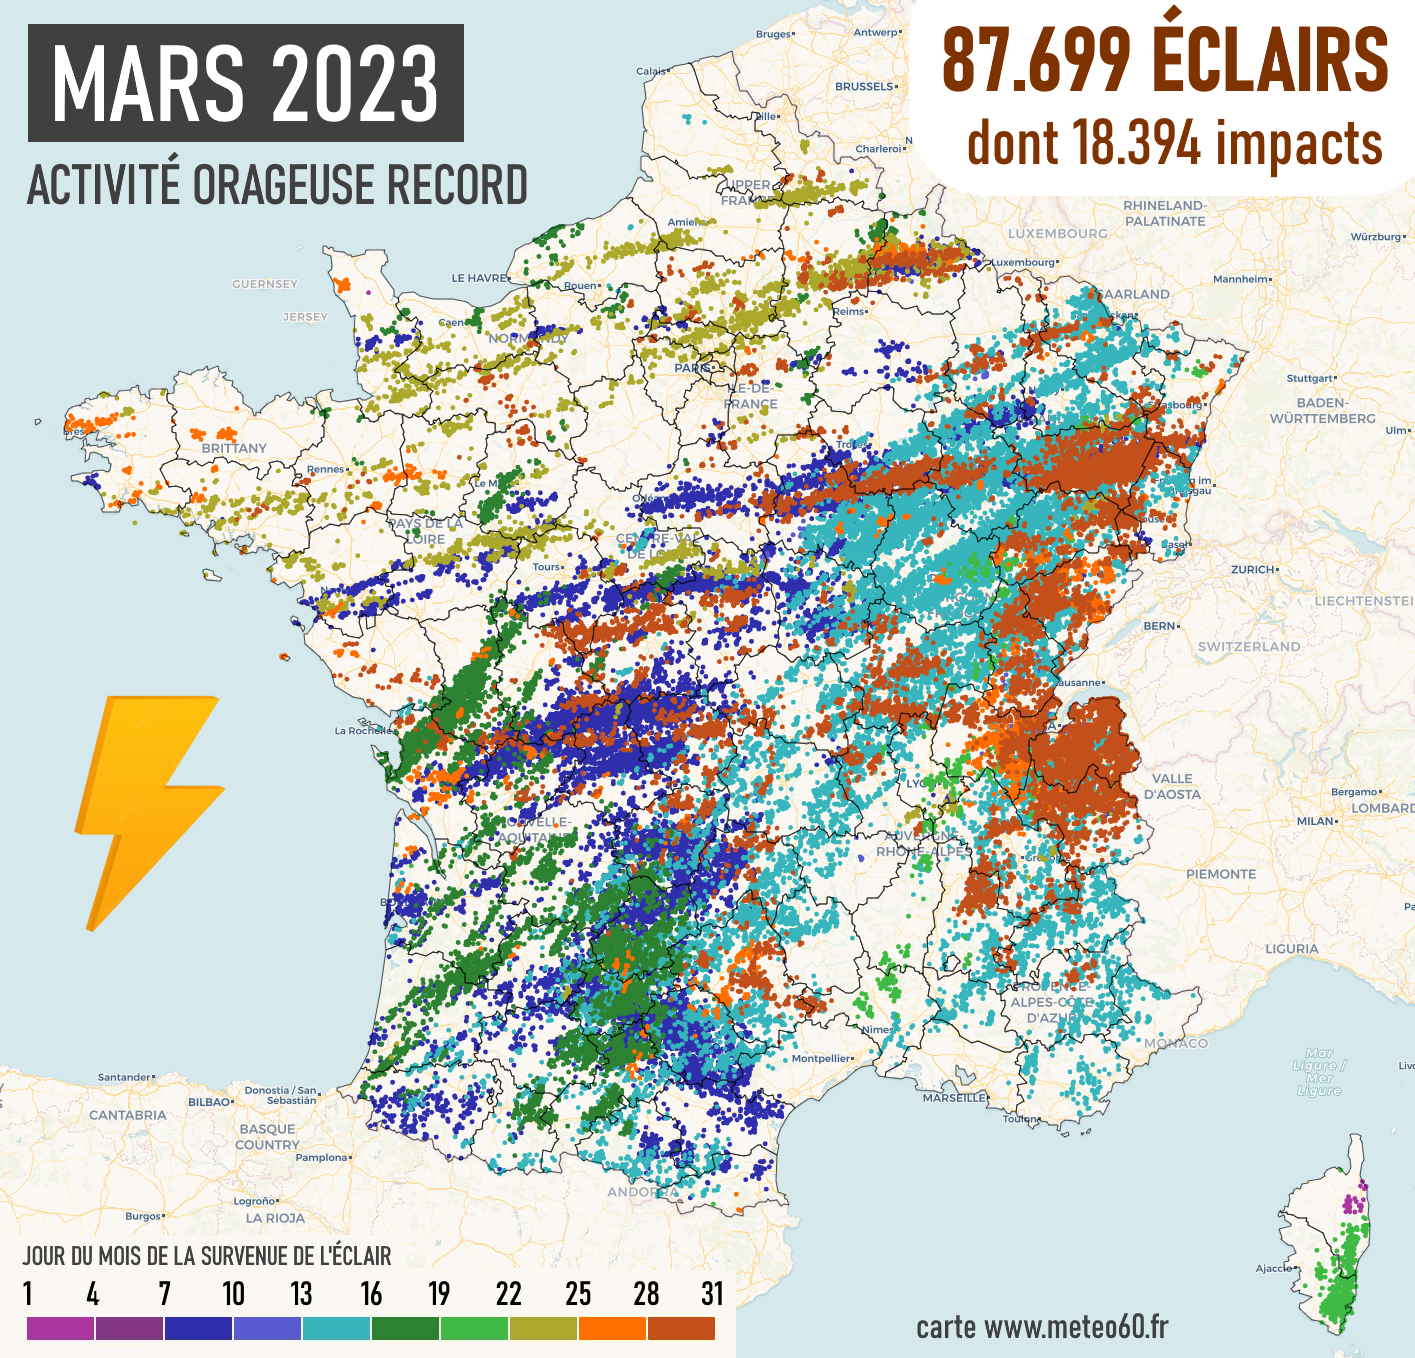 87.699 éclairs enregistrés en France en mars 2023